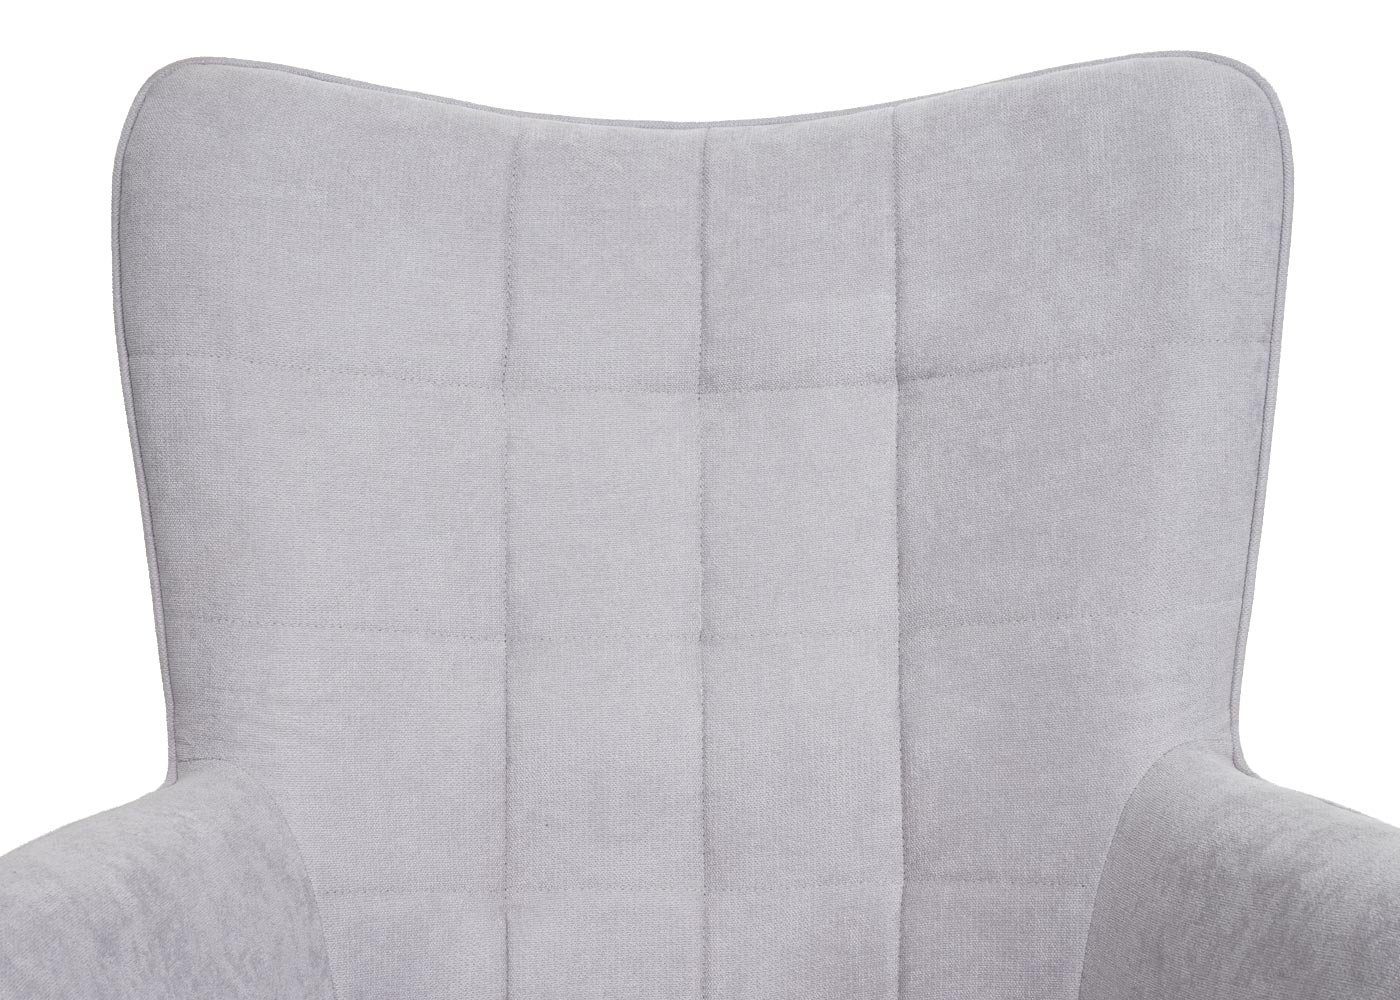 Polsterung grau Große Bequeme Sitzfläche, Schaukelfunktion, | MCW-K36, grau Schaukelstuhl MCW